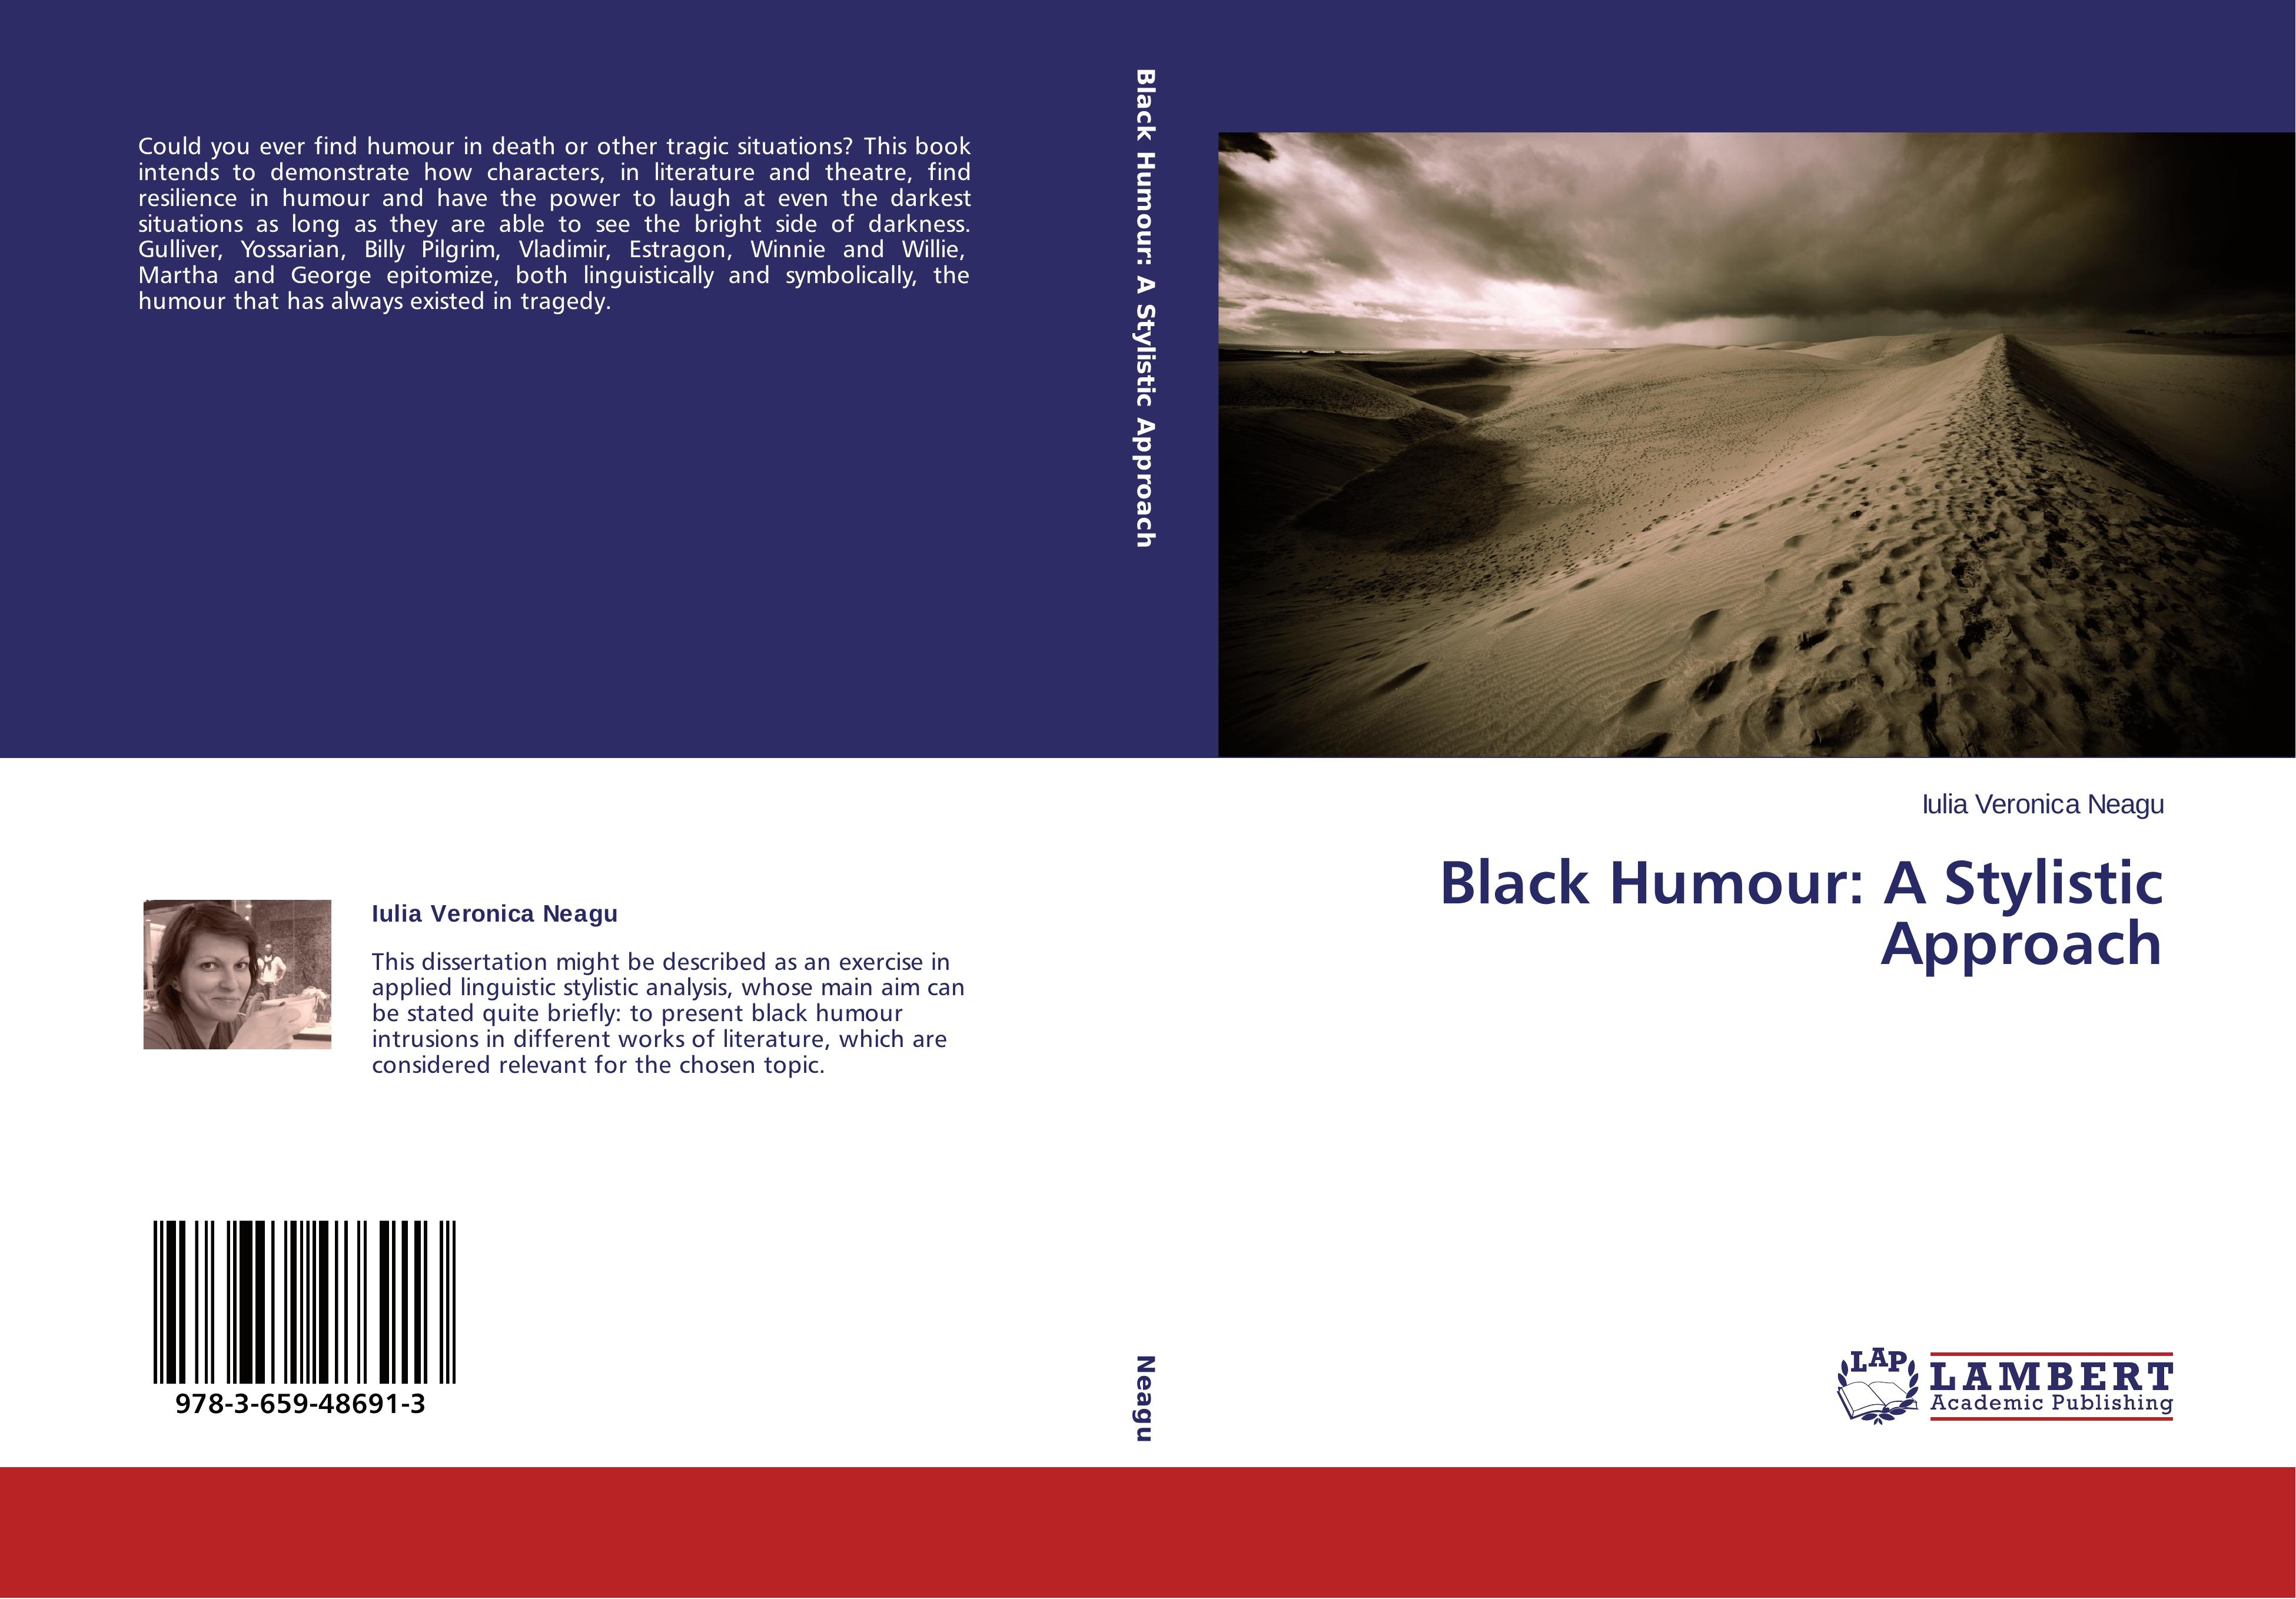 Black Humour: A Stylistic Approach - Iulia Veronica Neagu